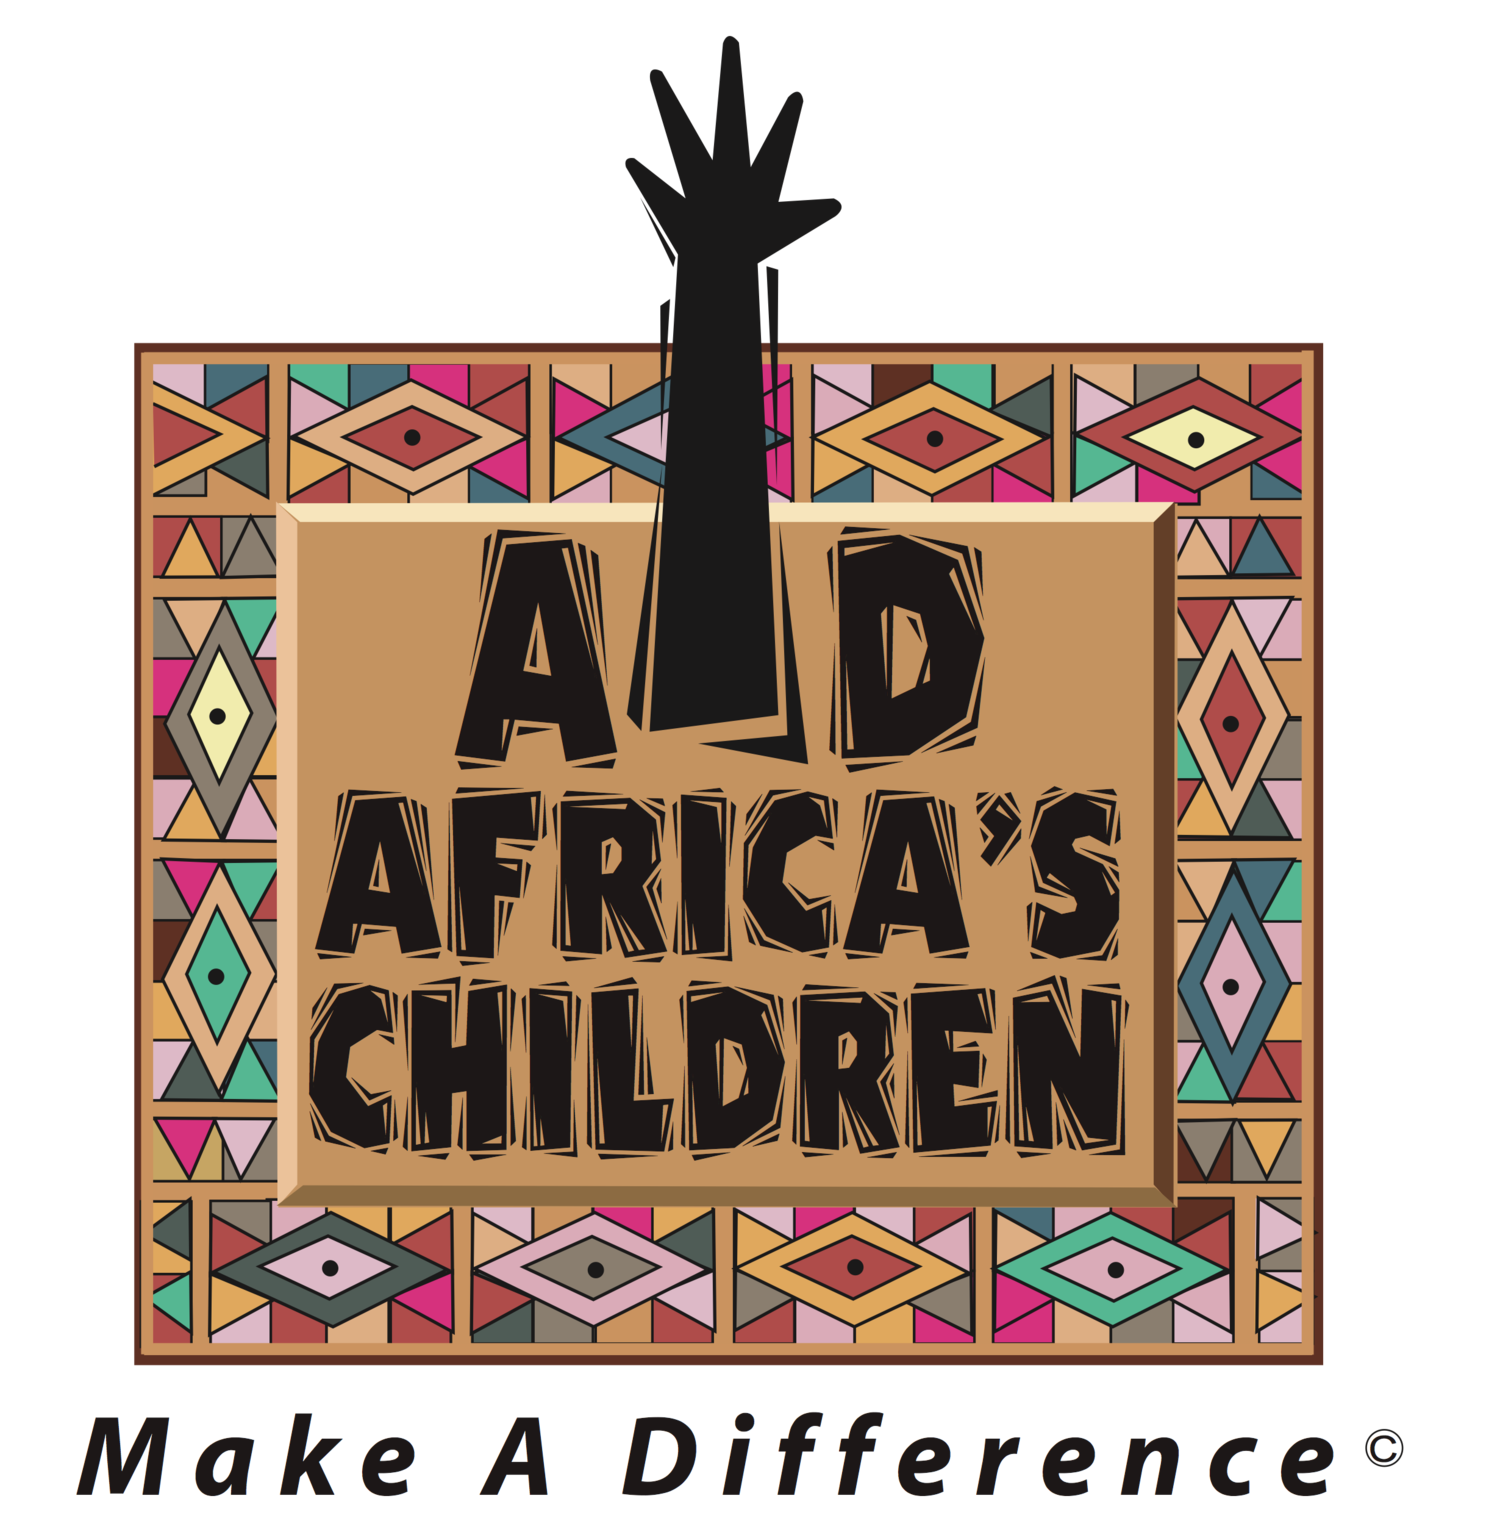 Aid Africa's Children